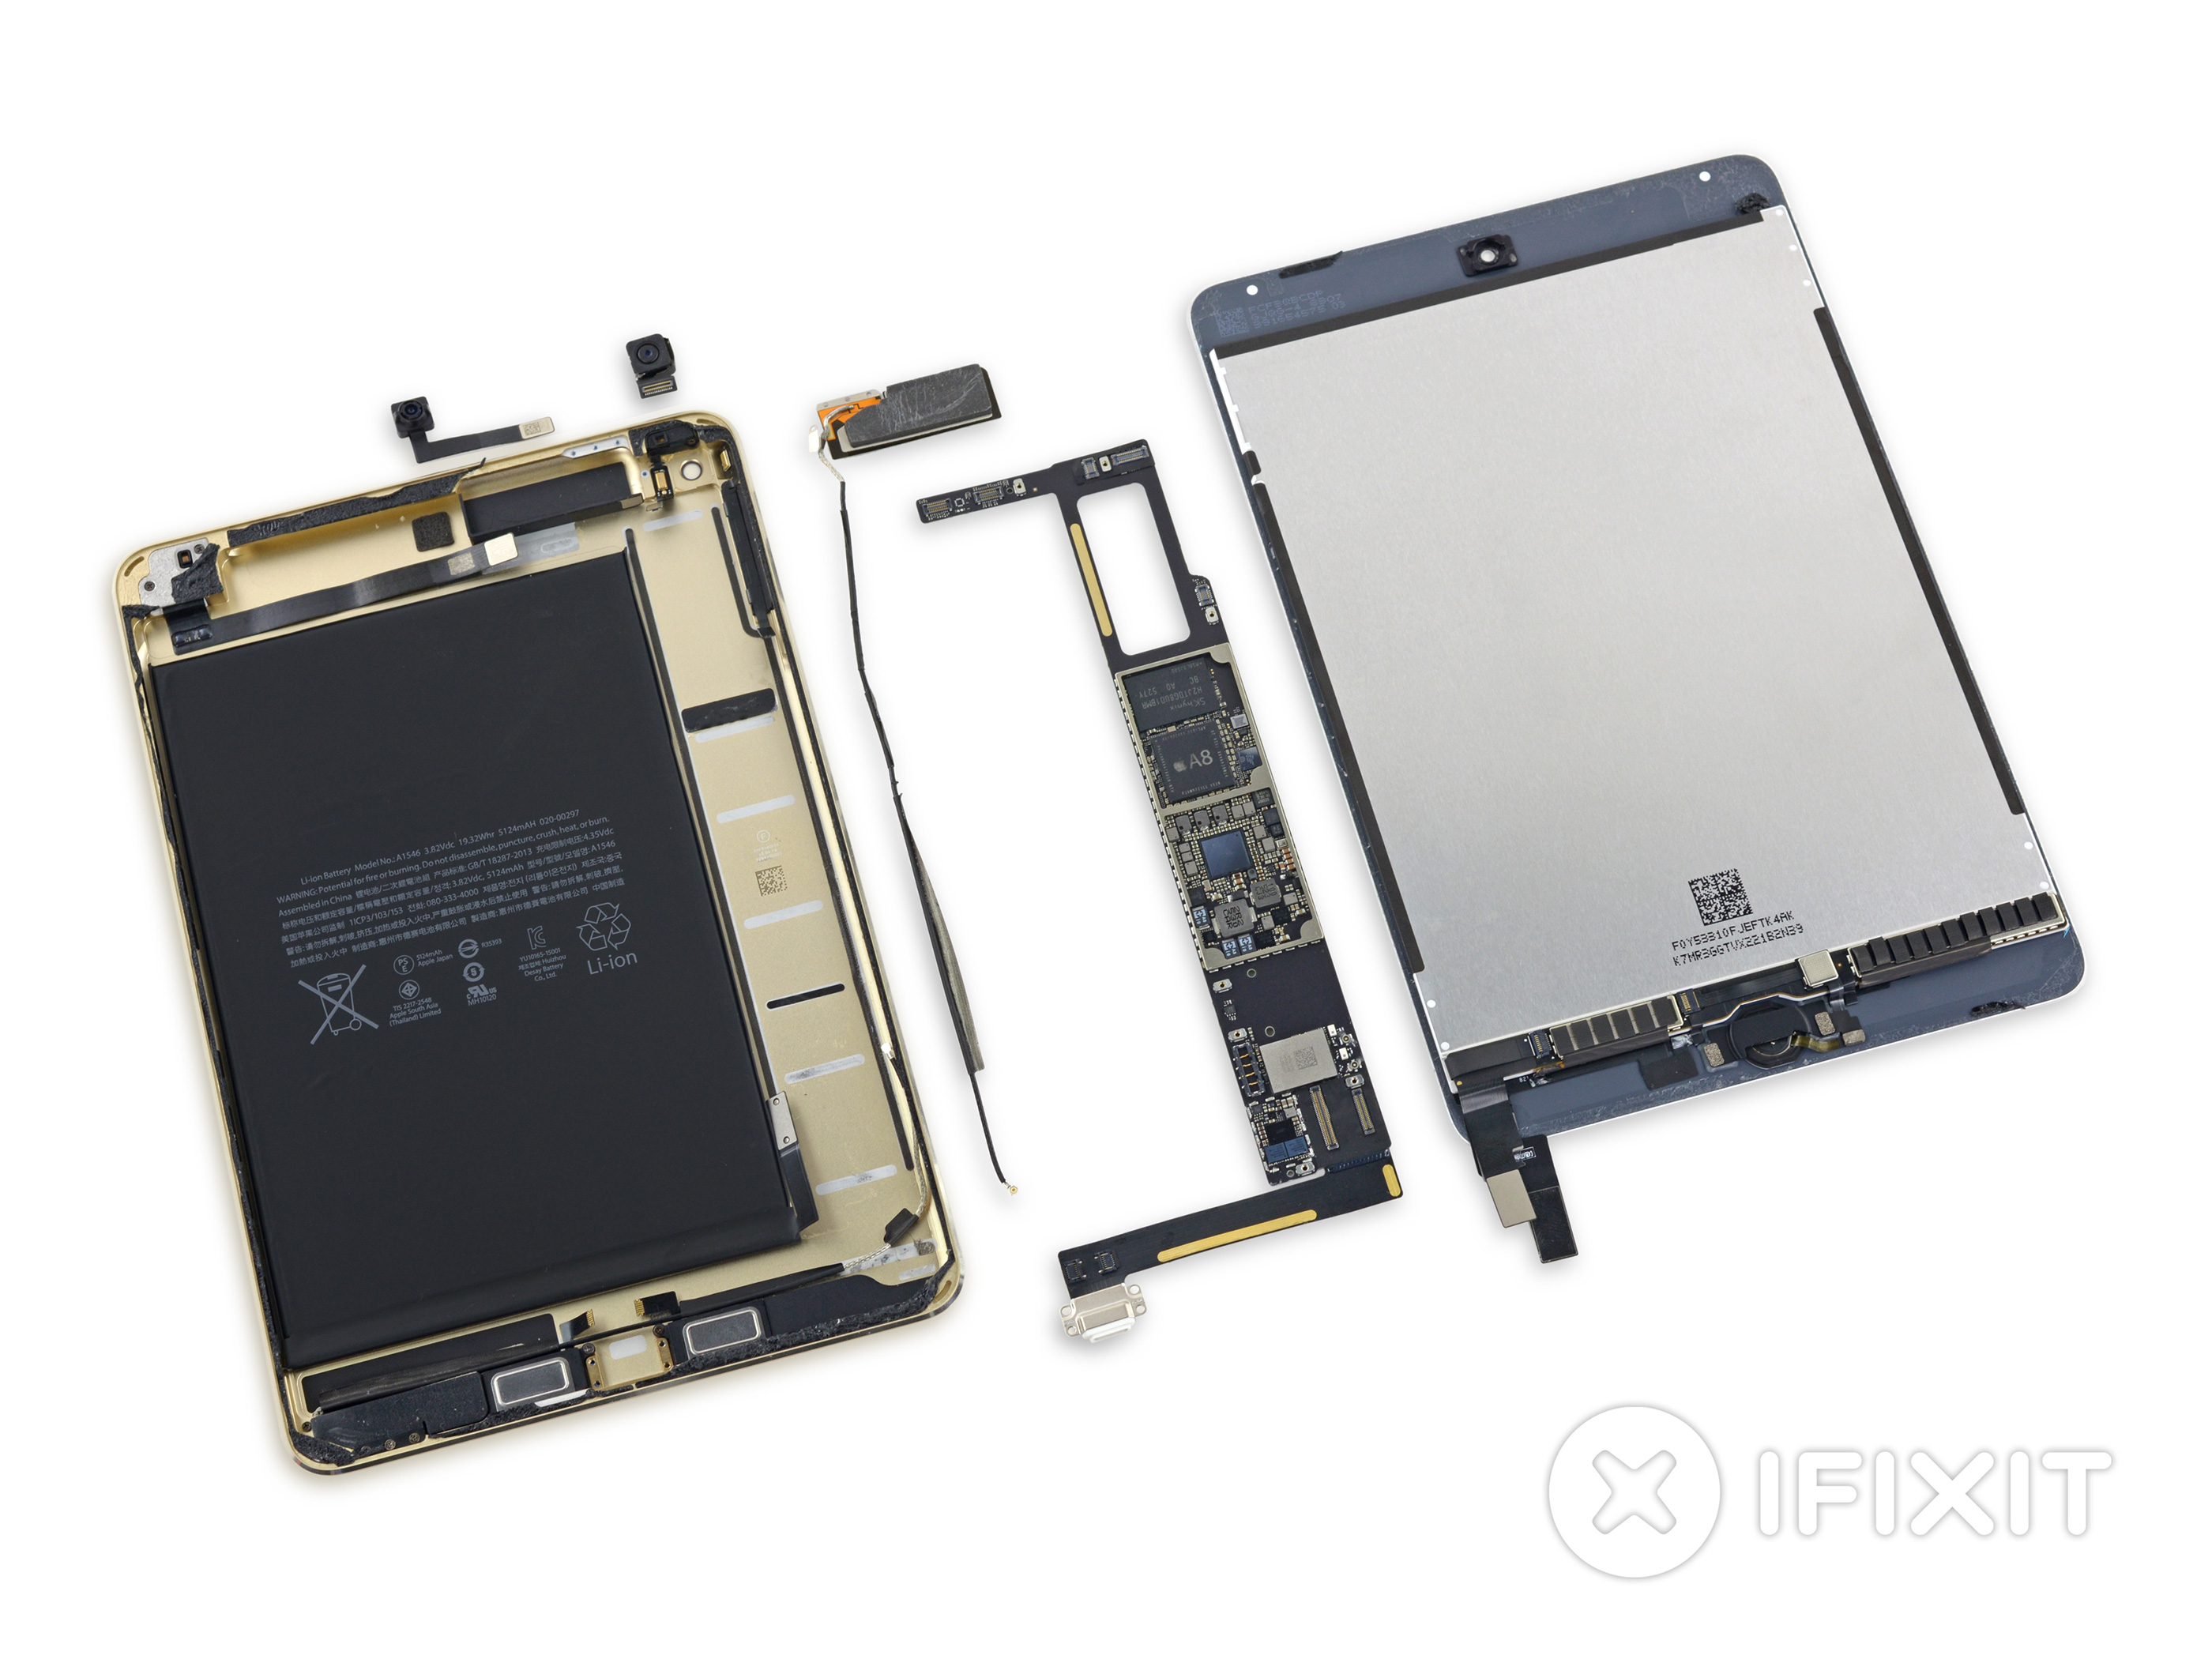 iPad mini 4 desmontado pela iFixit